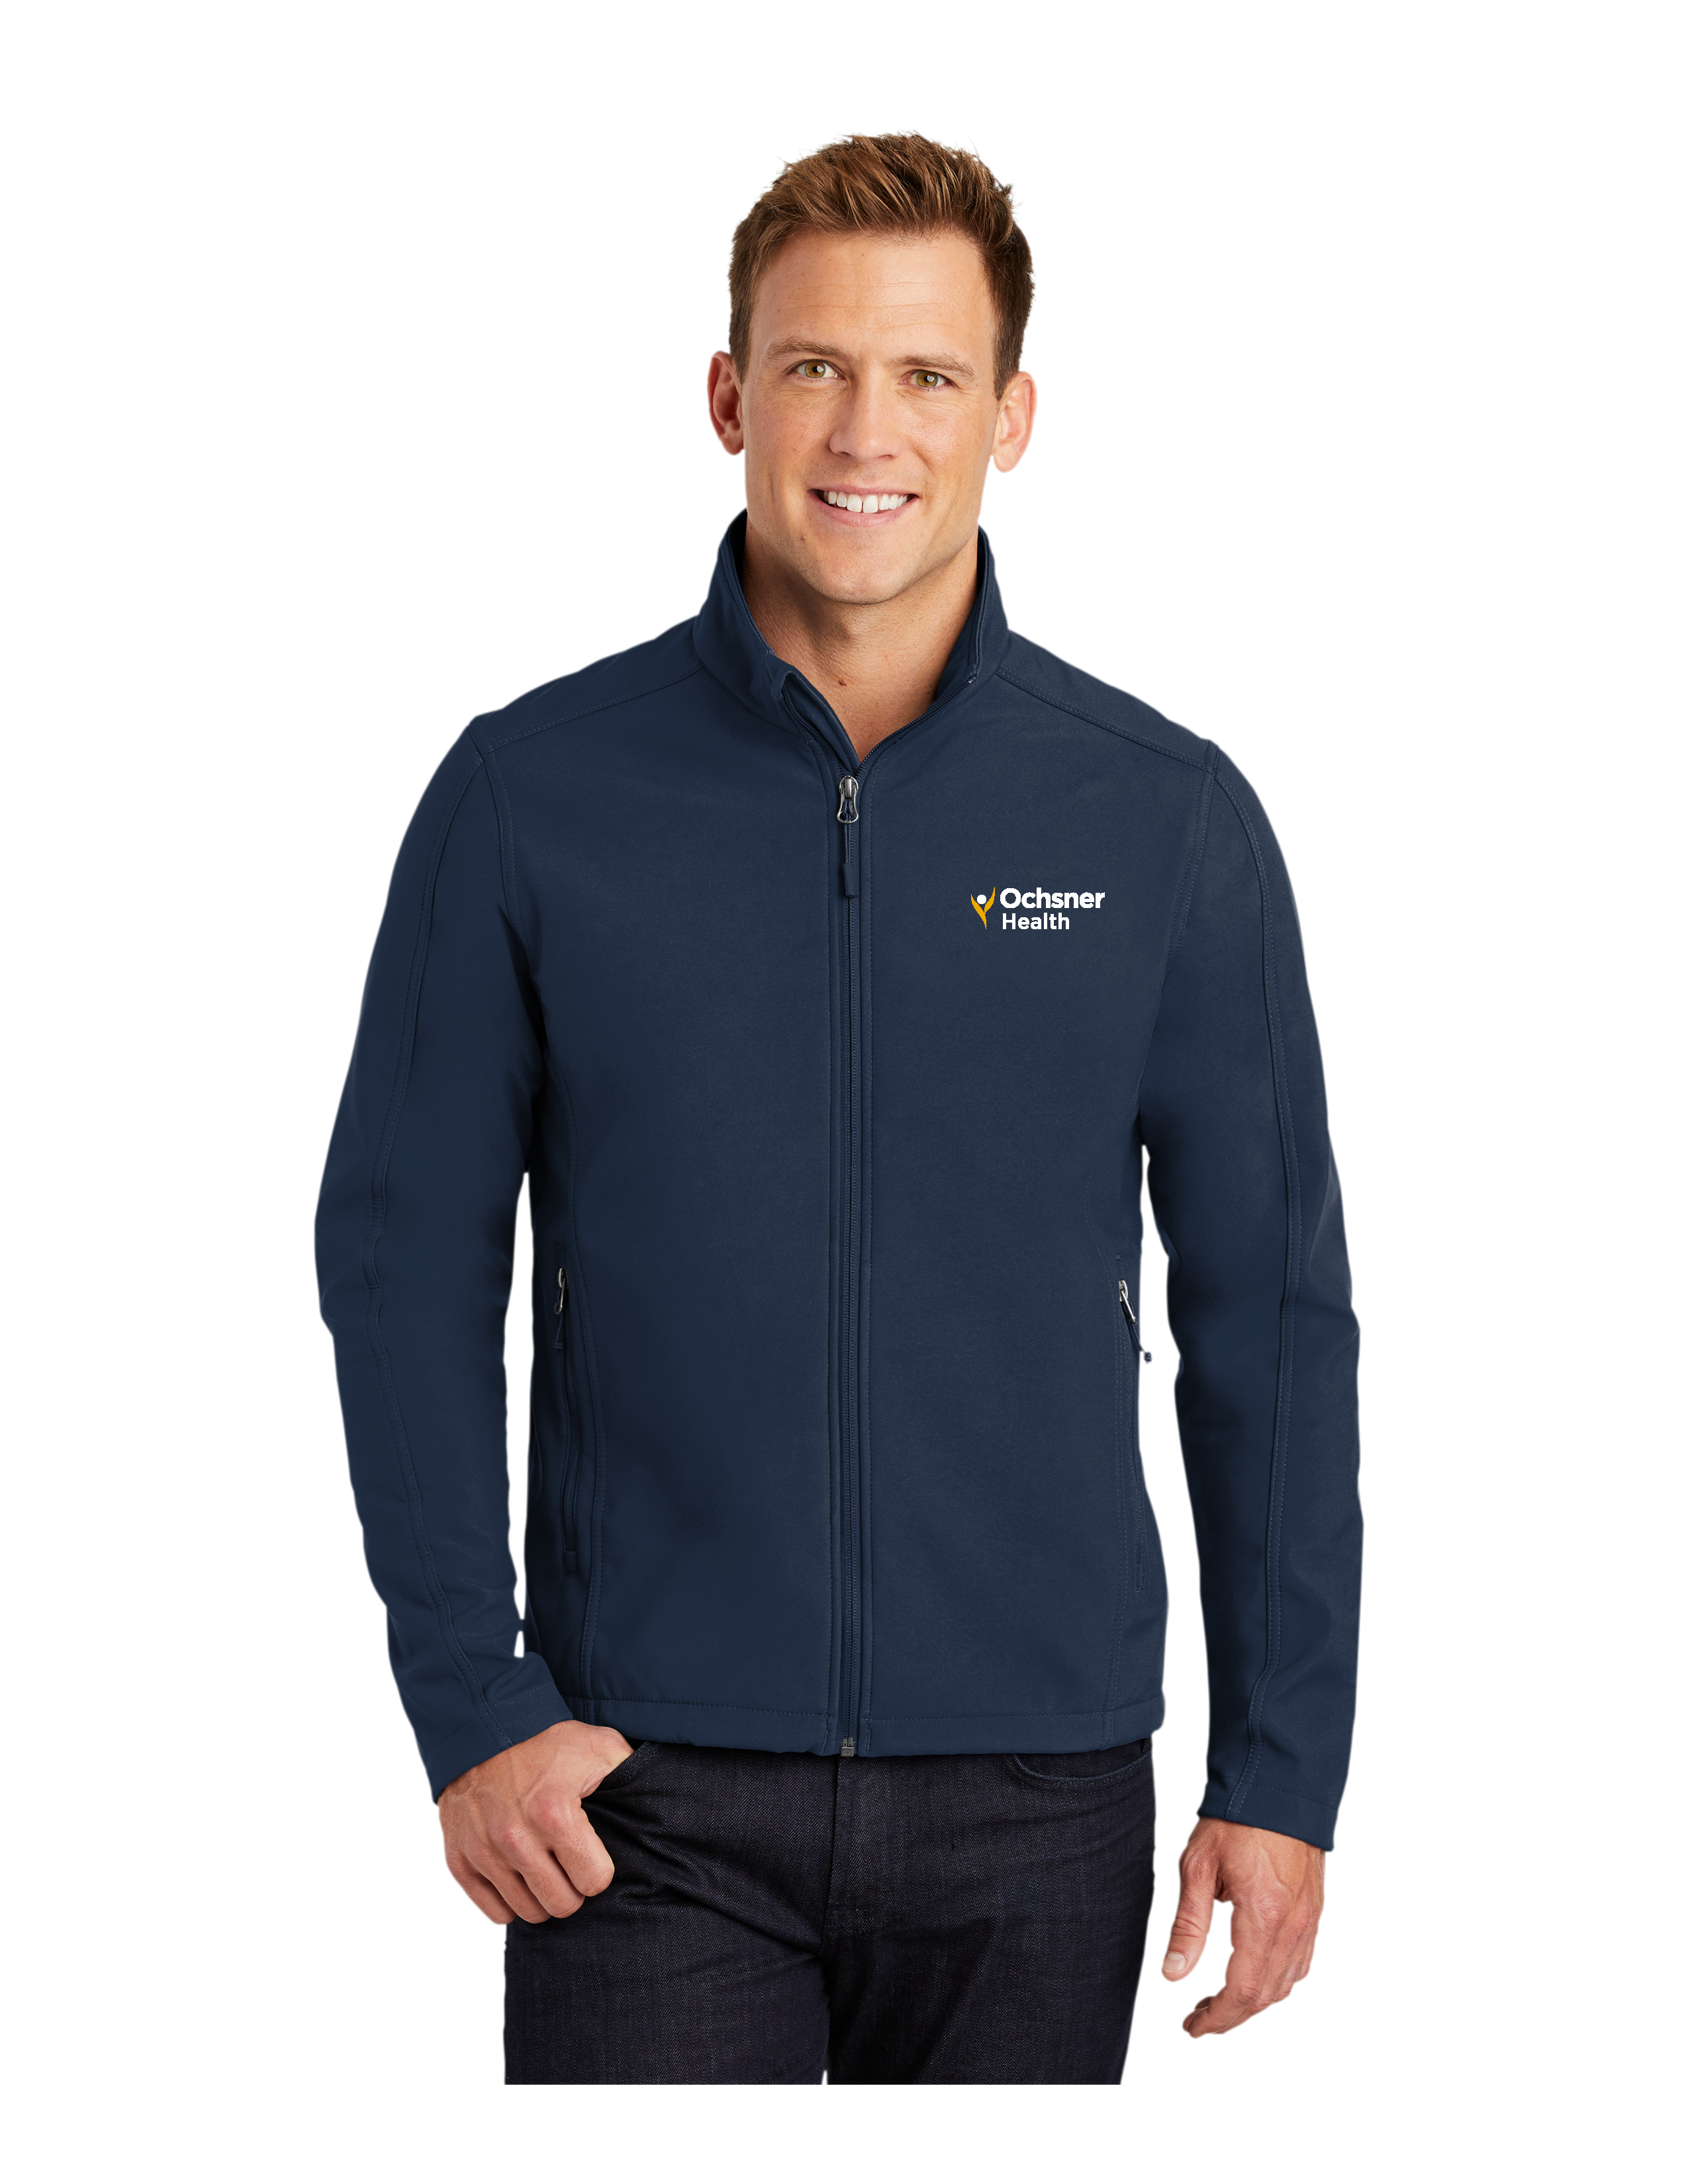 Men's Softshell Jacket, Navy, large image number 1